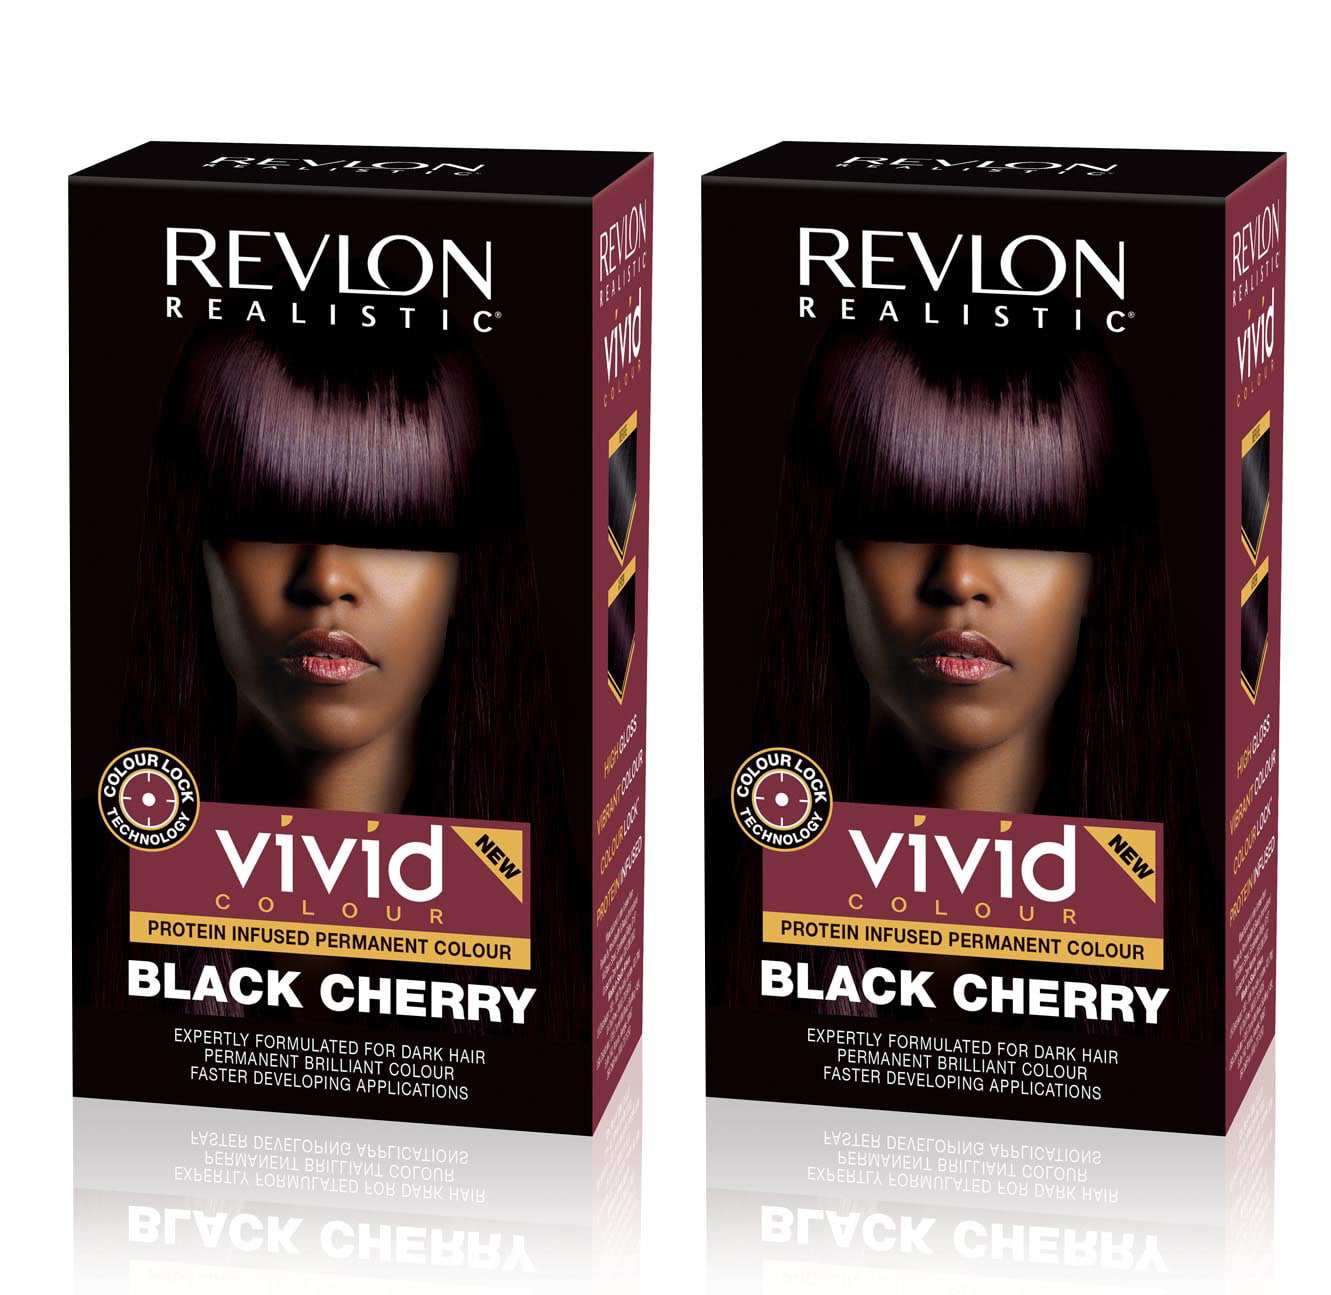 Revlon Realistic Vivid Colour Hair Dye for Dark Hair, Midnight Ink - Pack  of 2 